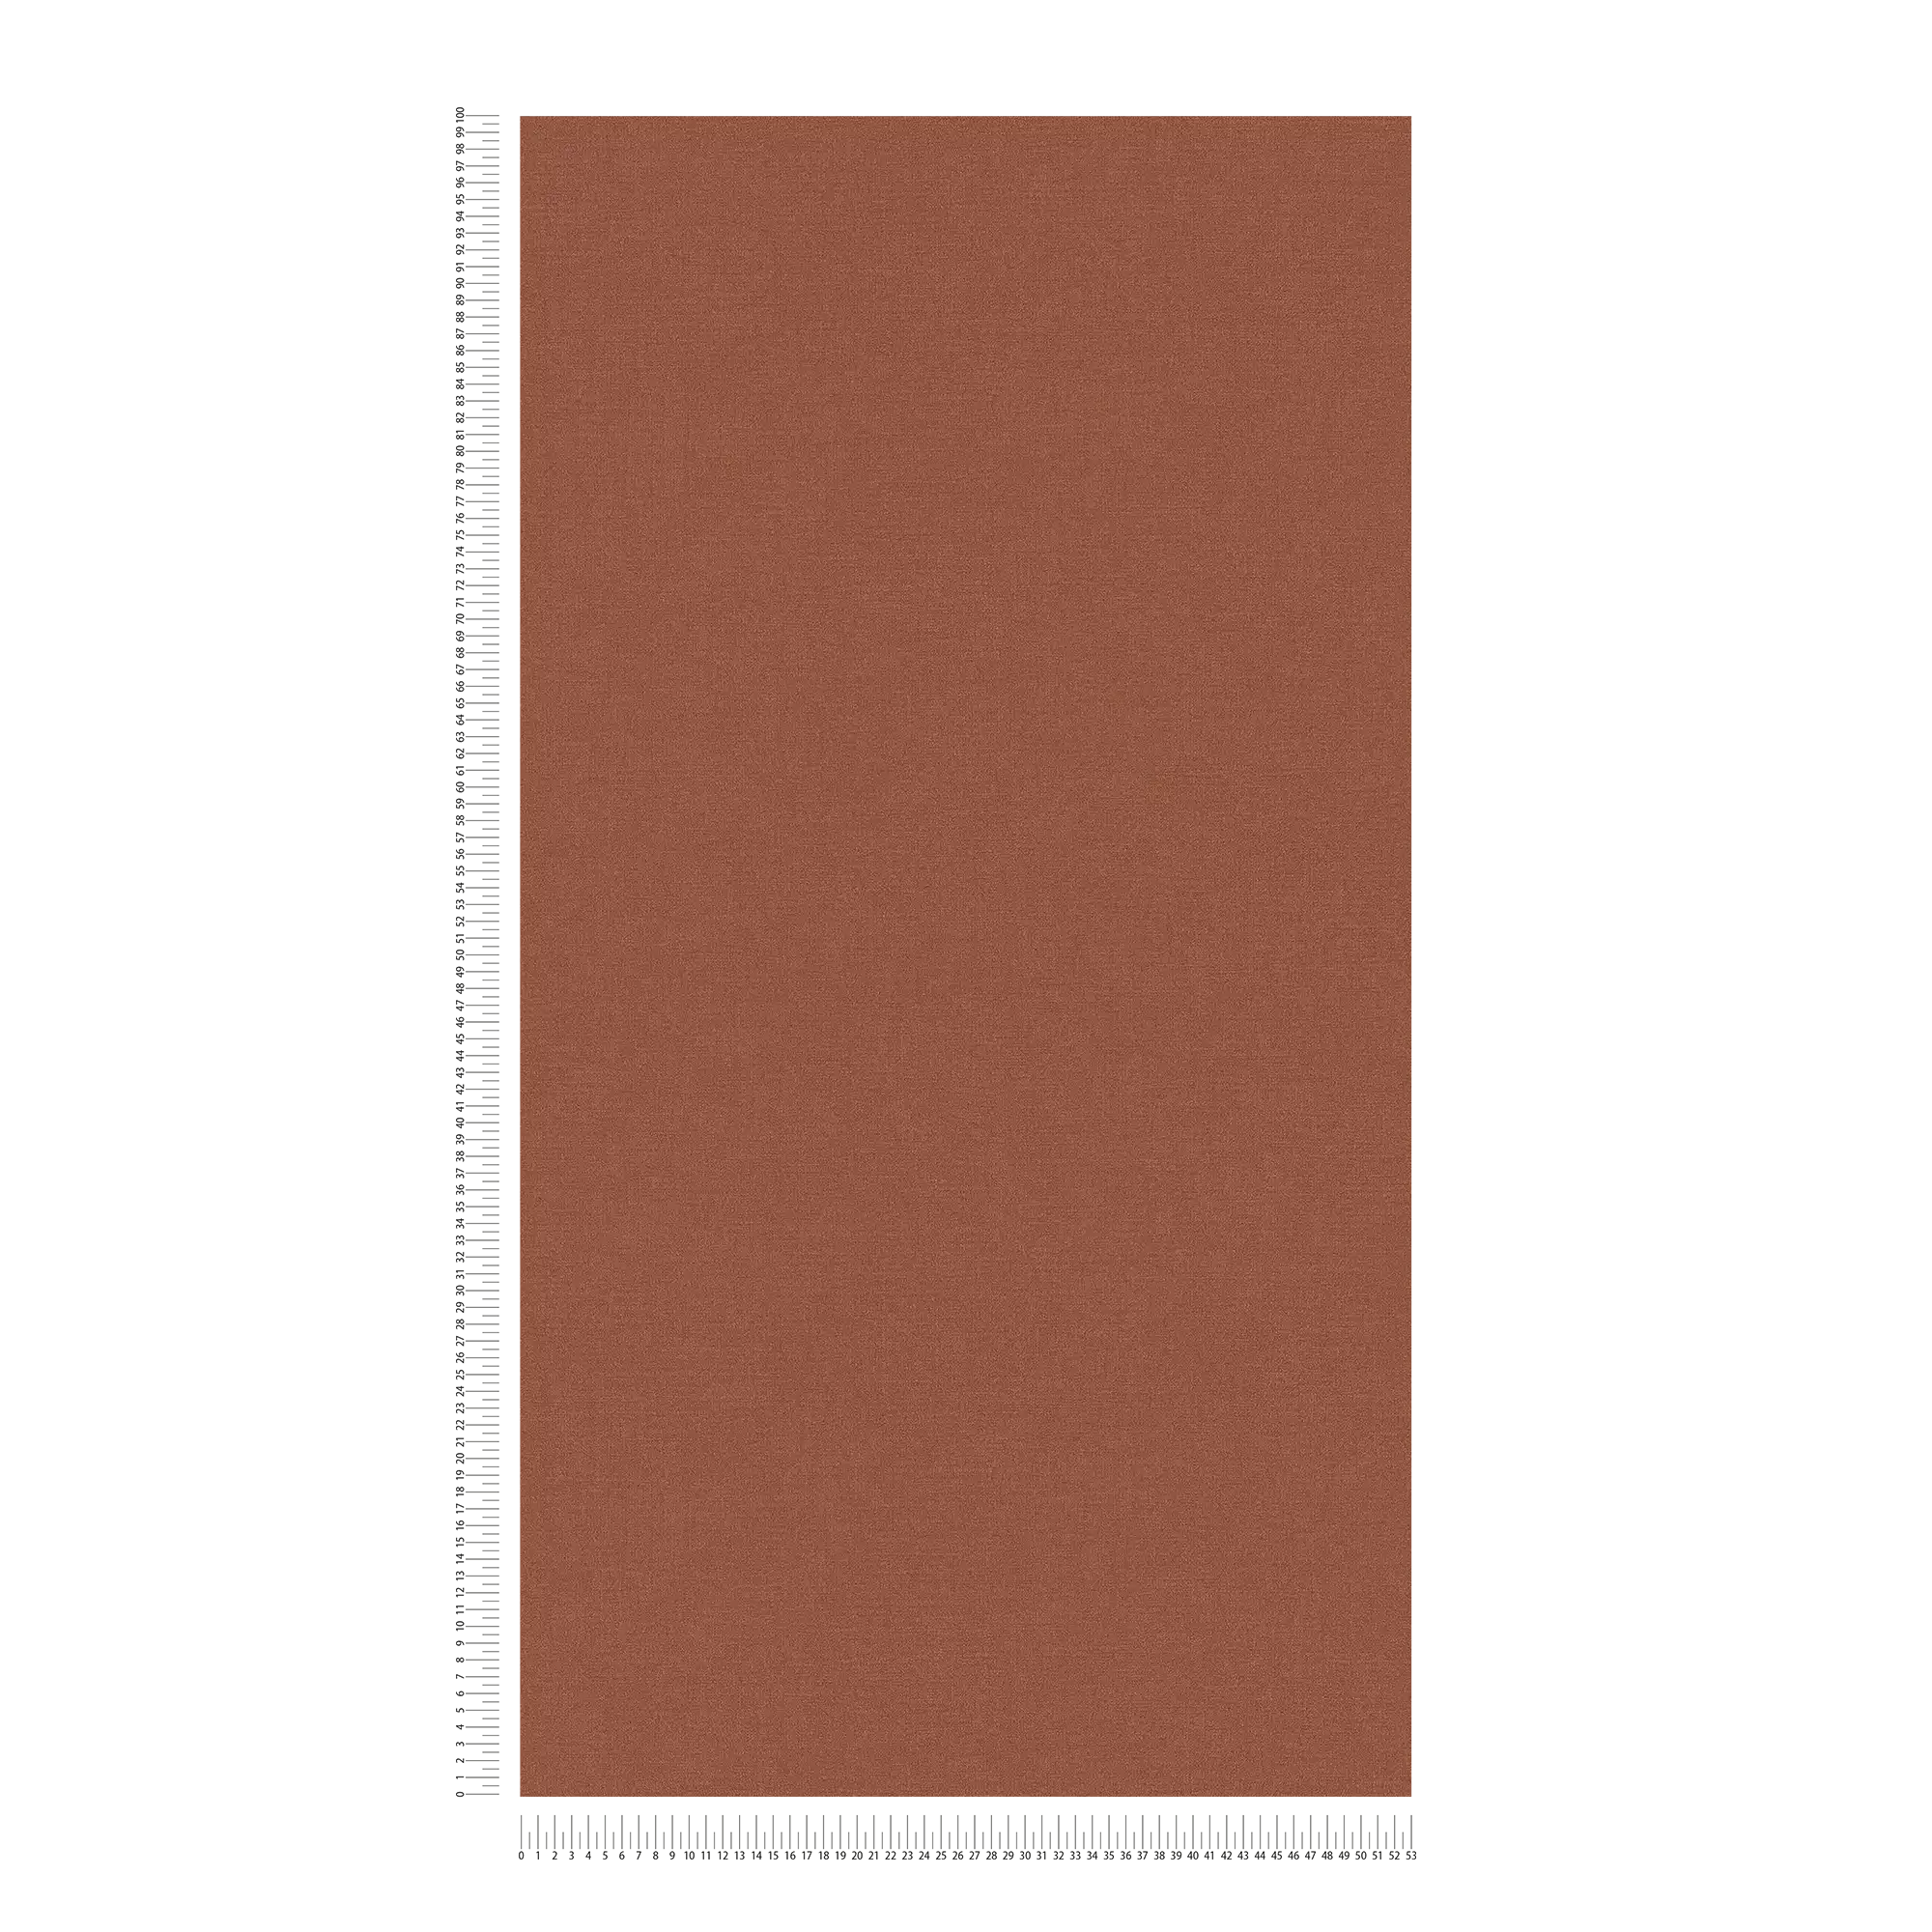             Plain wallpaper in dark shades - reddish brown
        